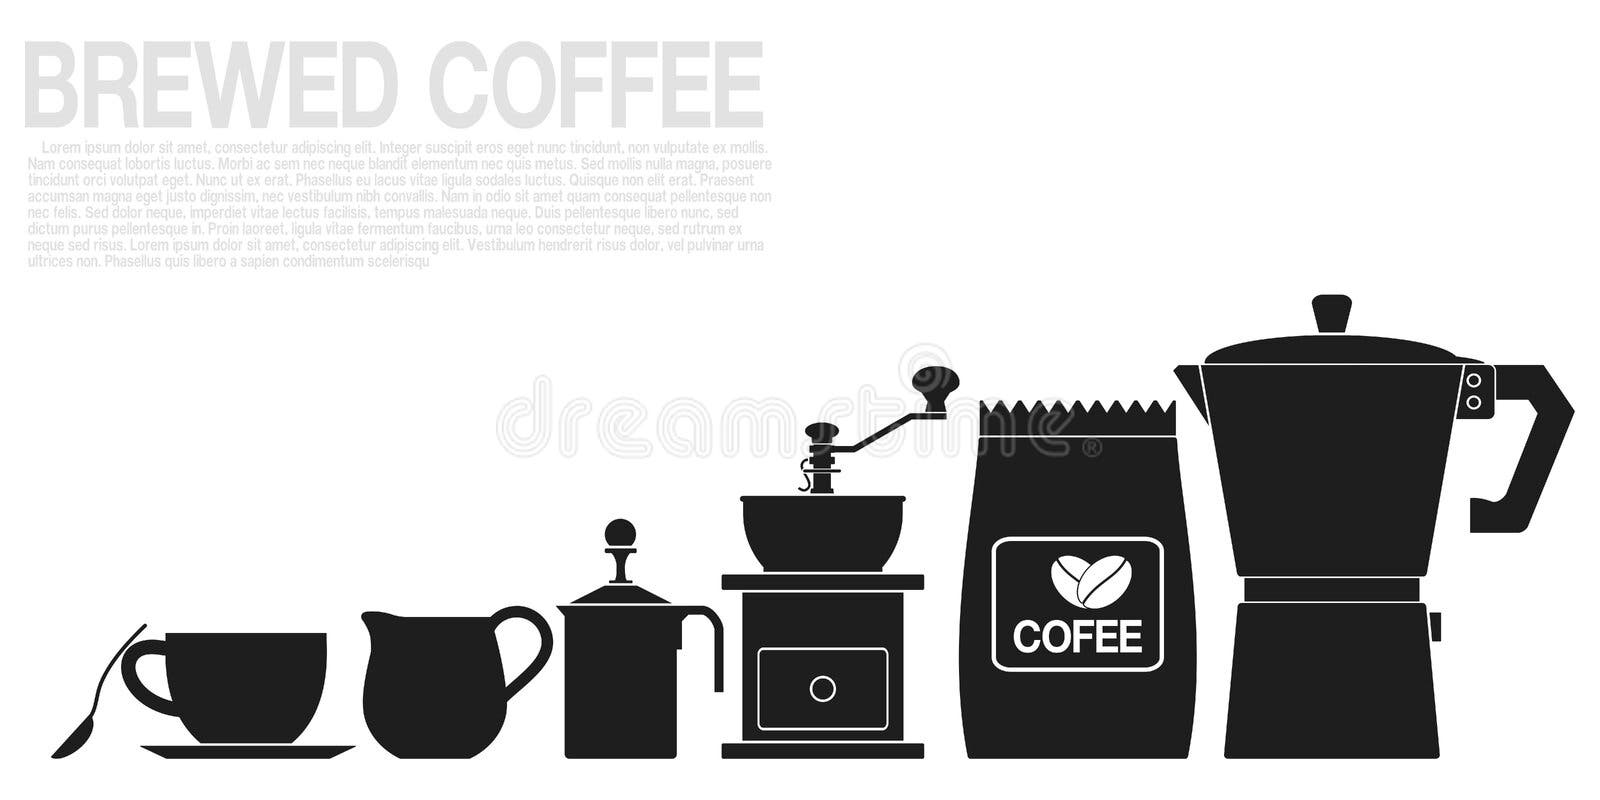 Illustration of coffee utensils - Stock Illustration [44247890